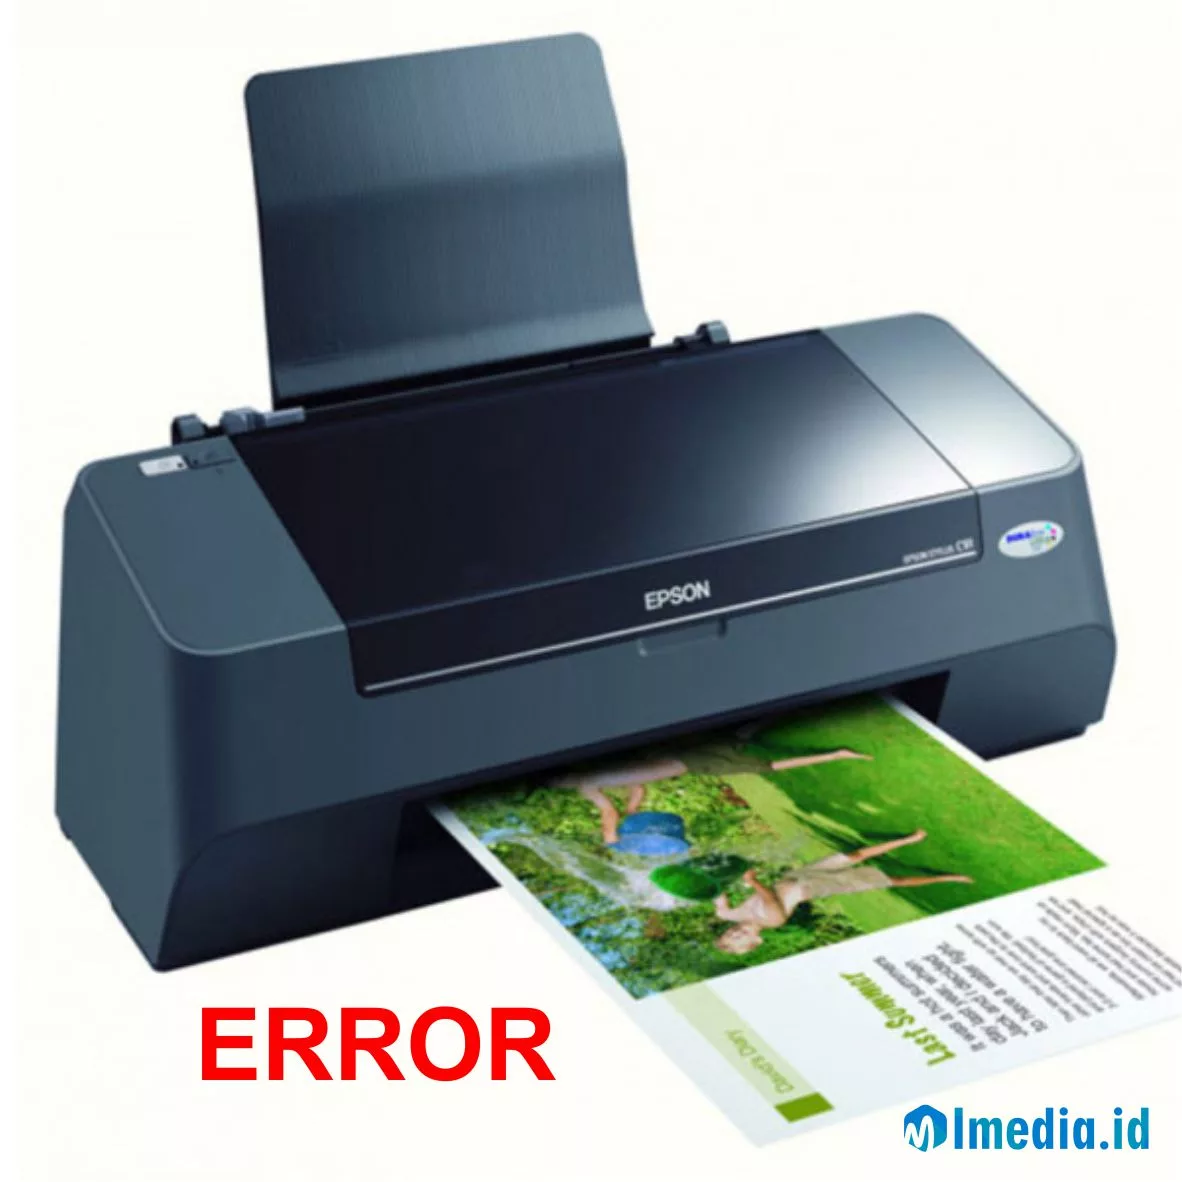 4 Cara Mengatasi Printer Error Untuk Pemula